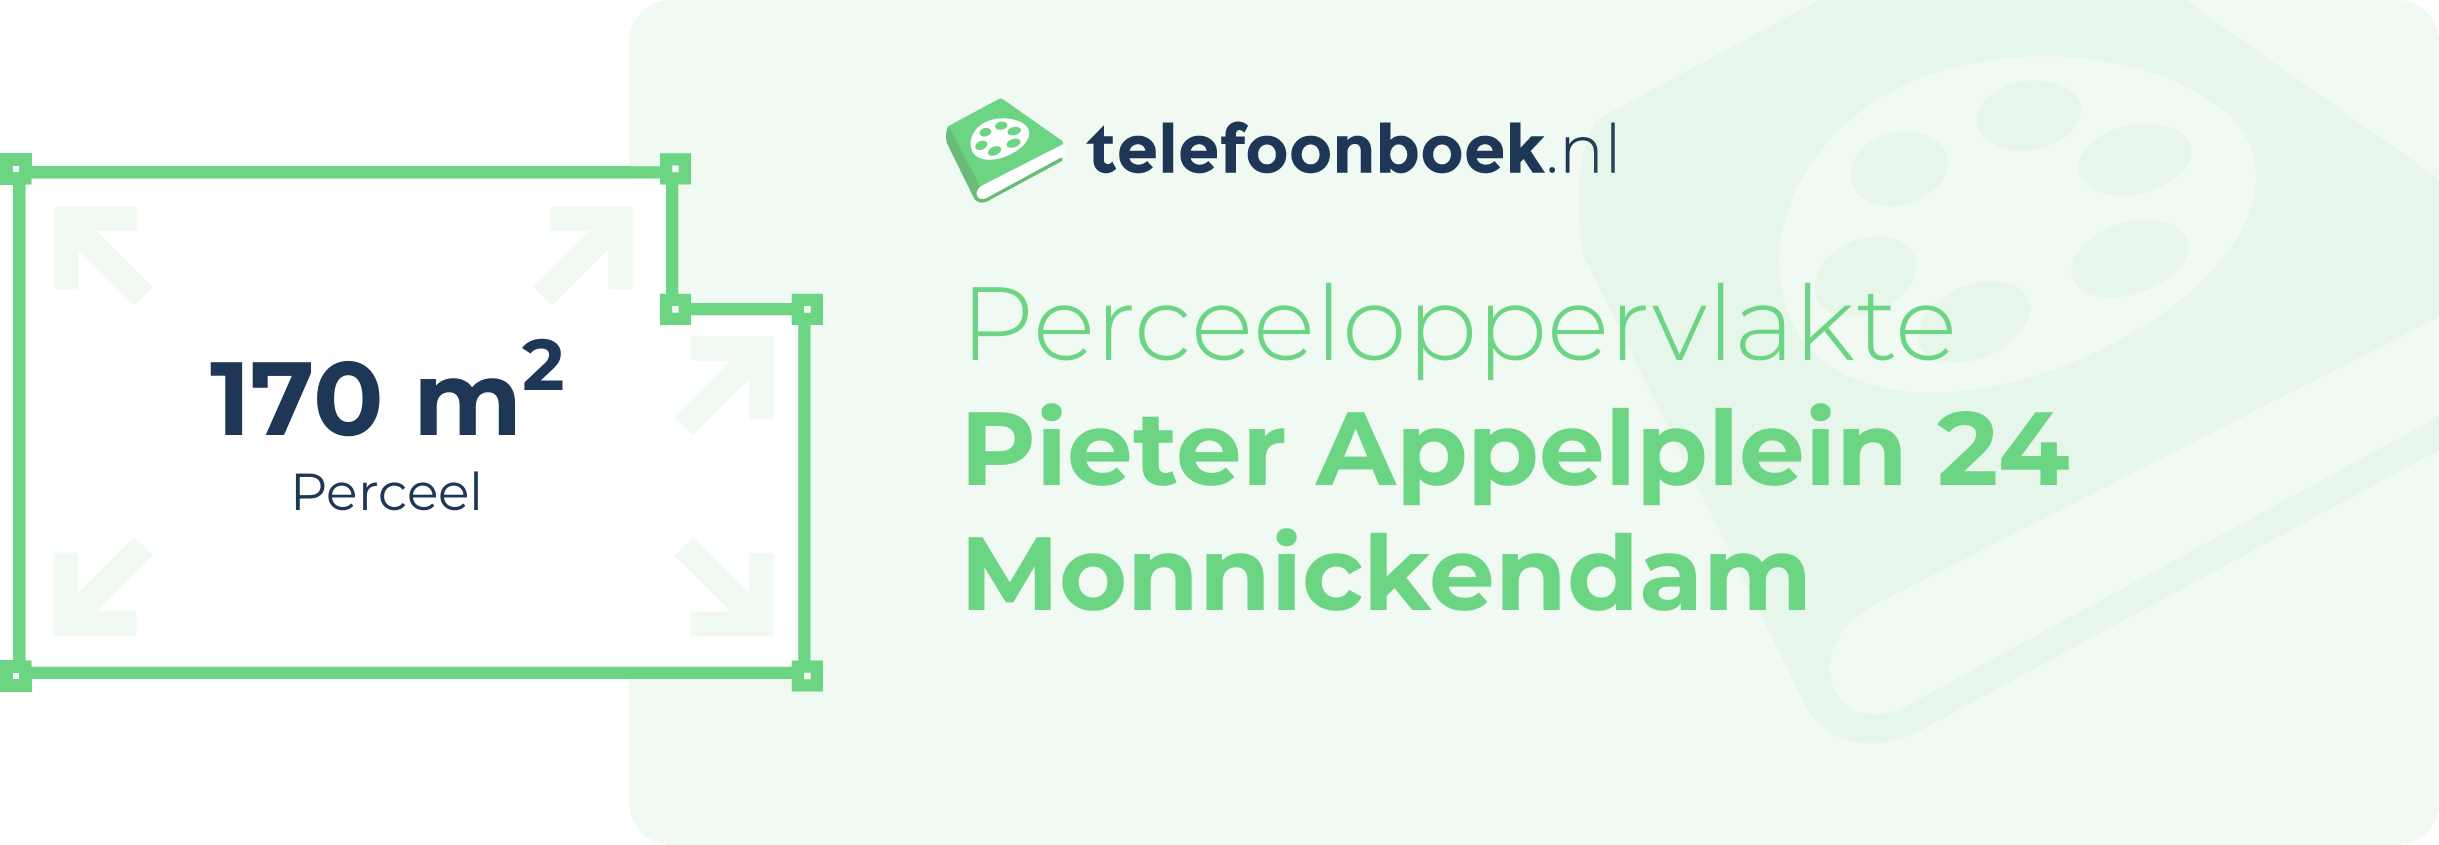 Perceeloppervlakte Pieter Appelplein 24 Monnickendam